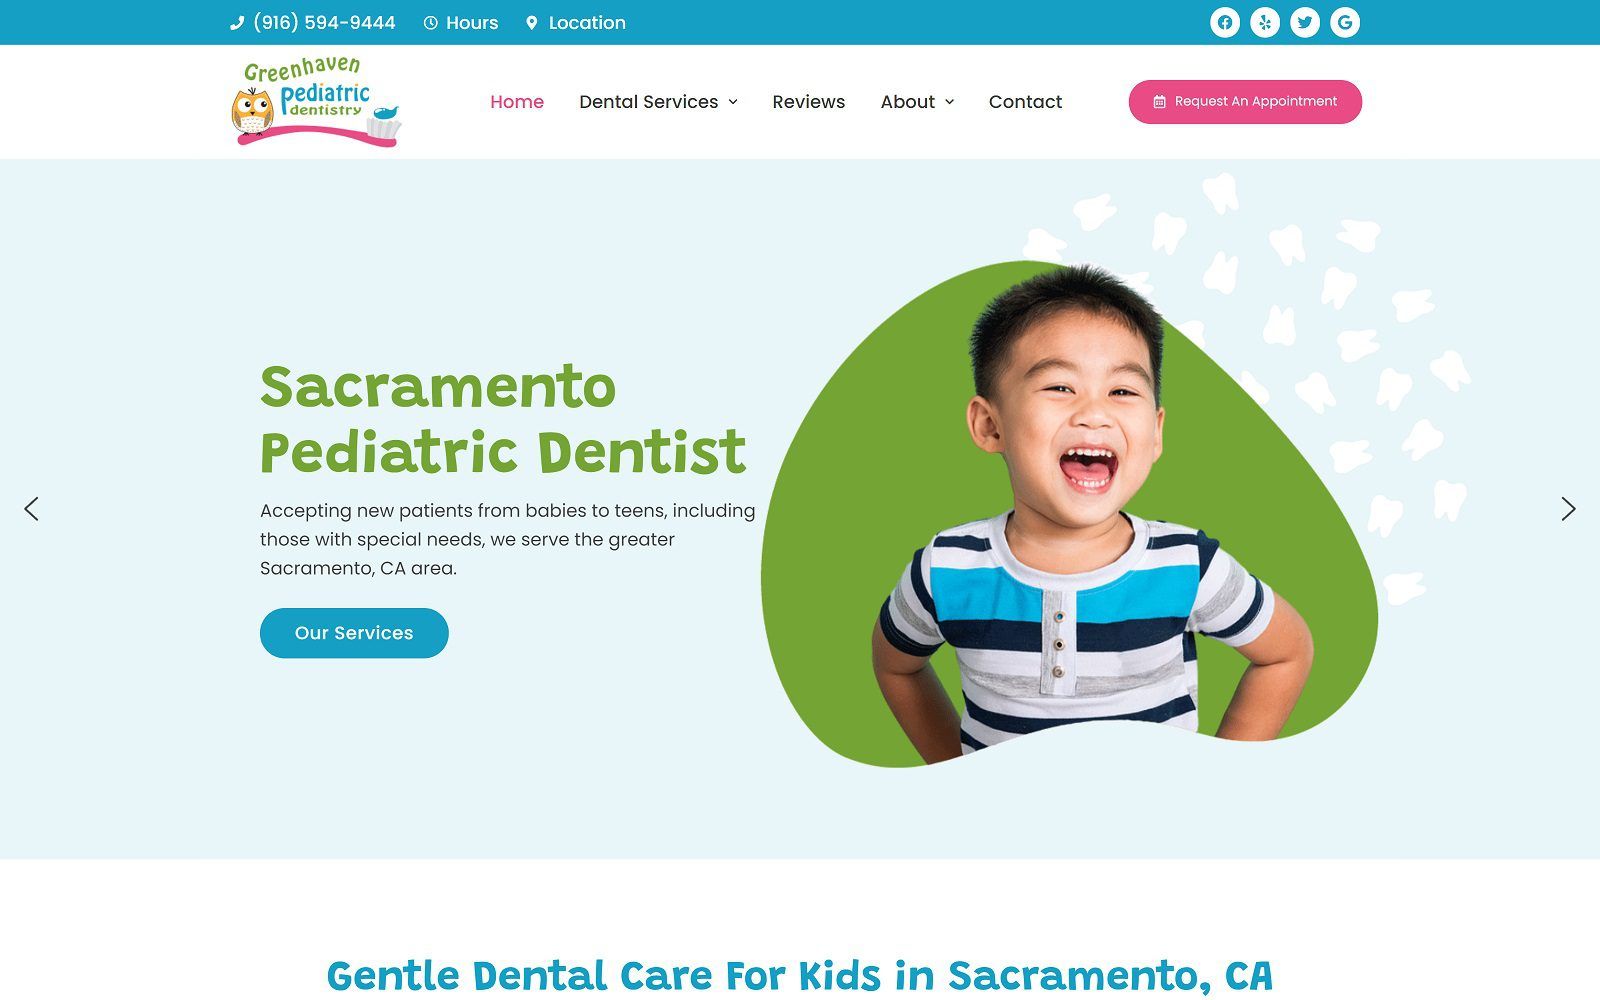 The screenshot greenhaven pediatric dentistry - brenda ho, dds website